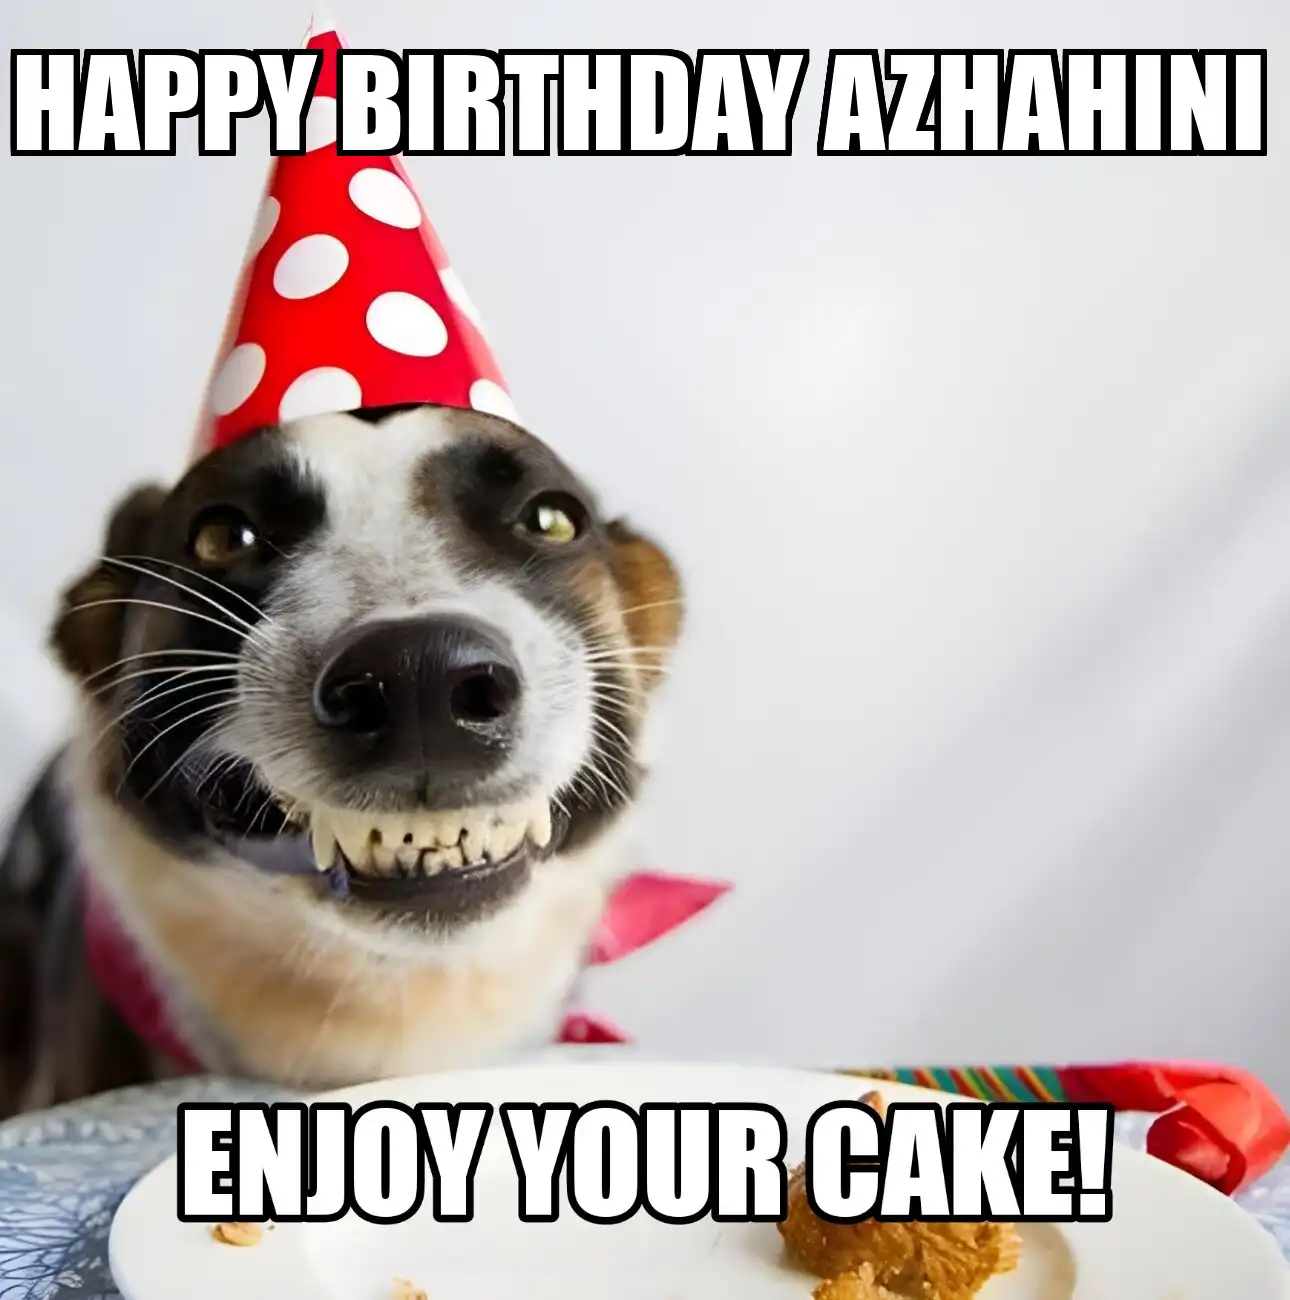 Happy Birthday Azhahini Enjoy Your Cake Dog Meme